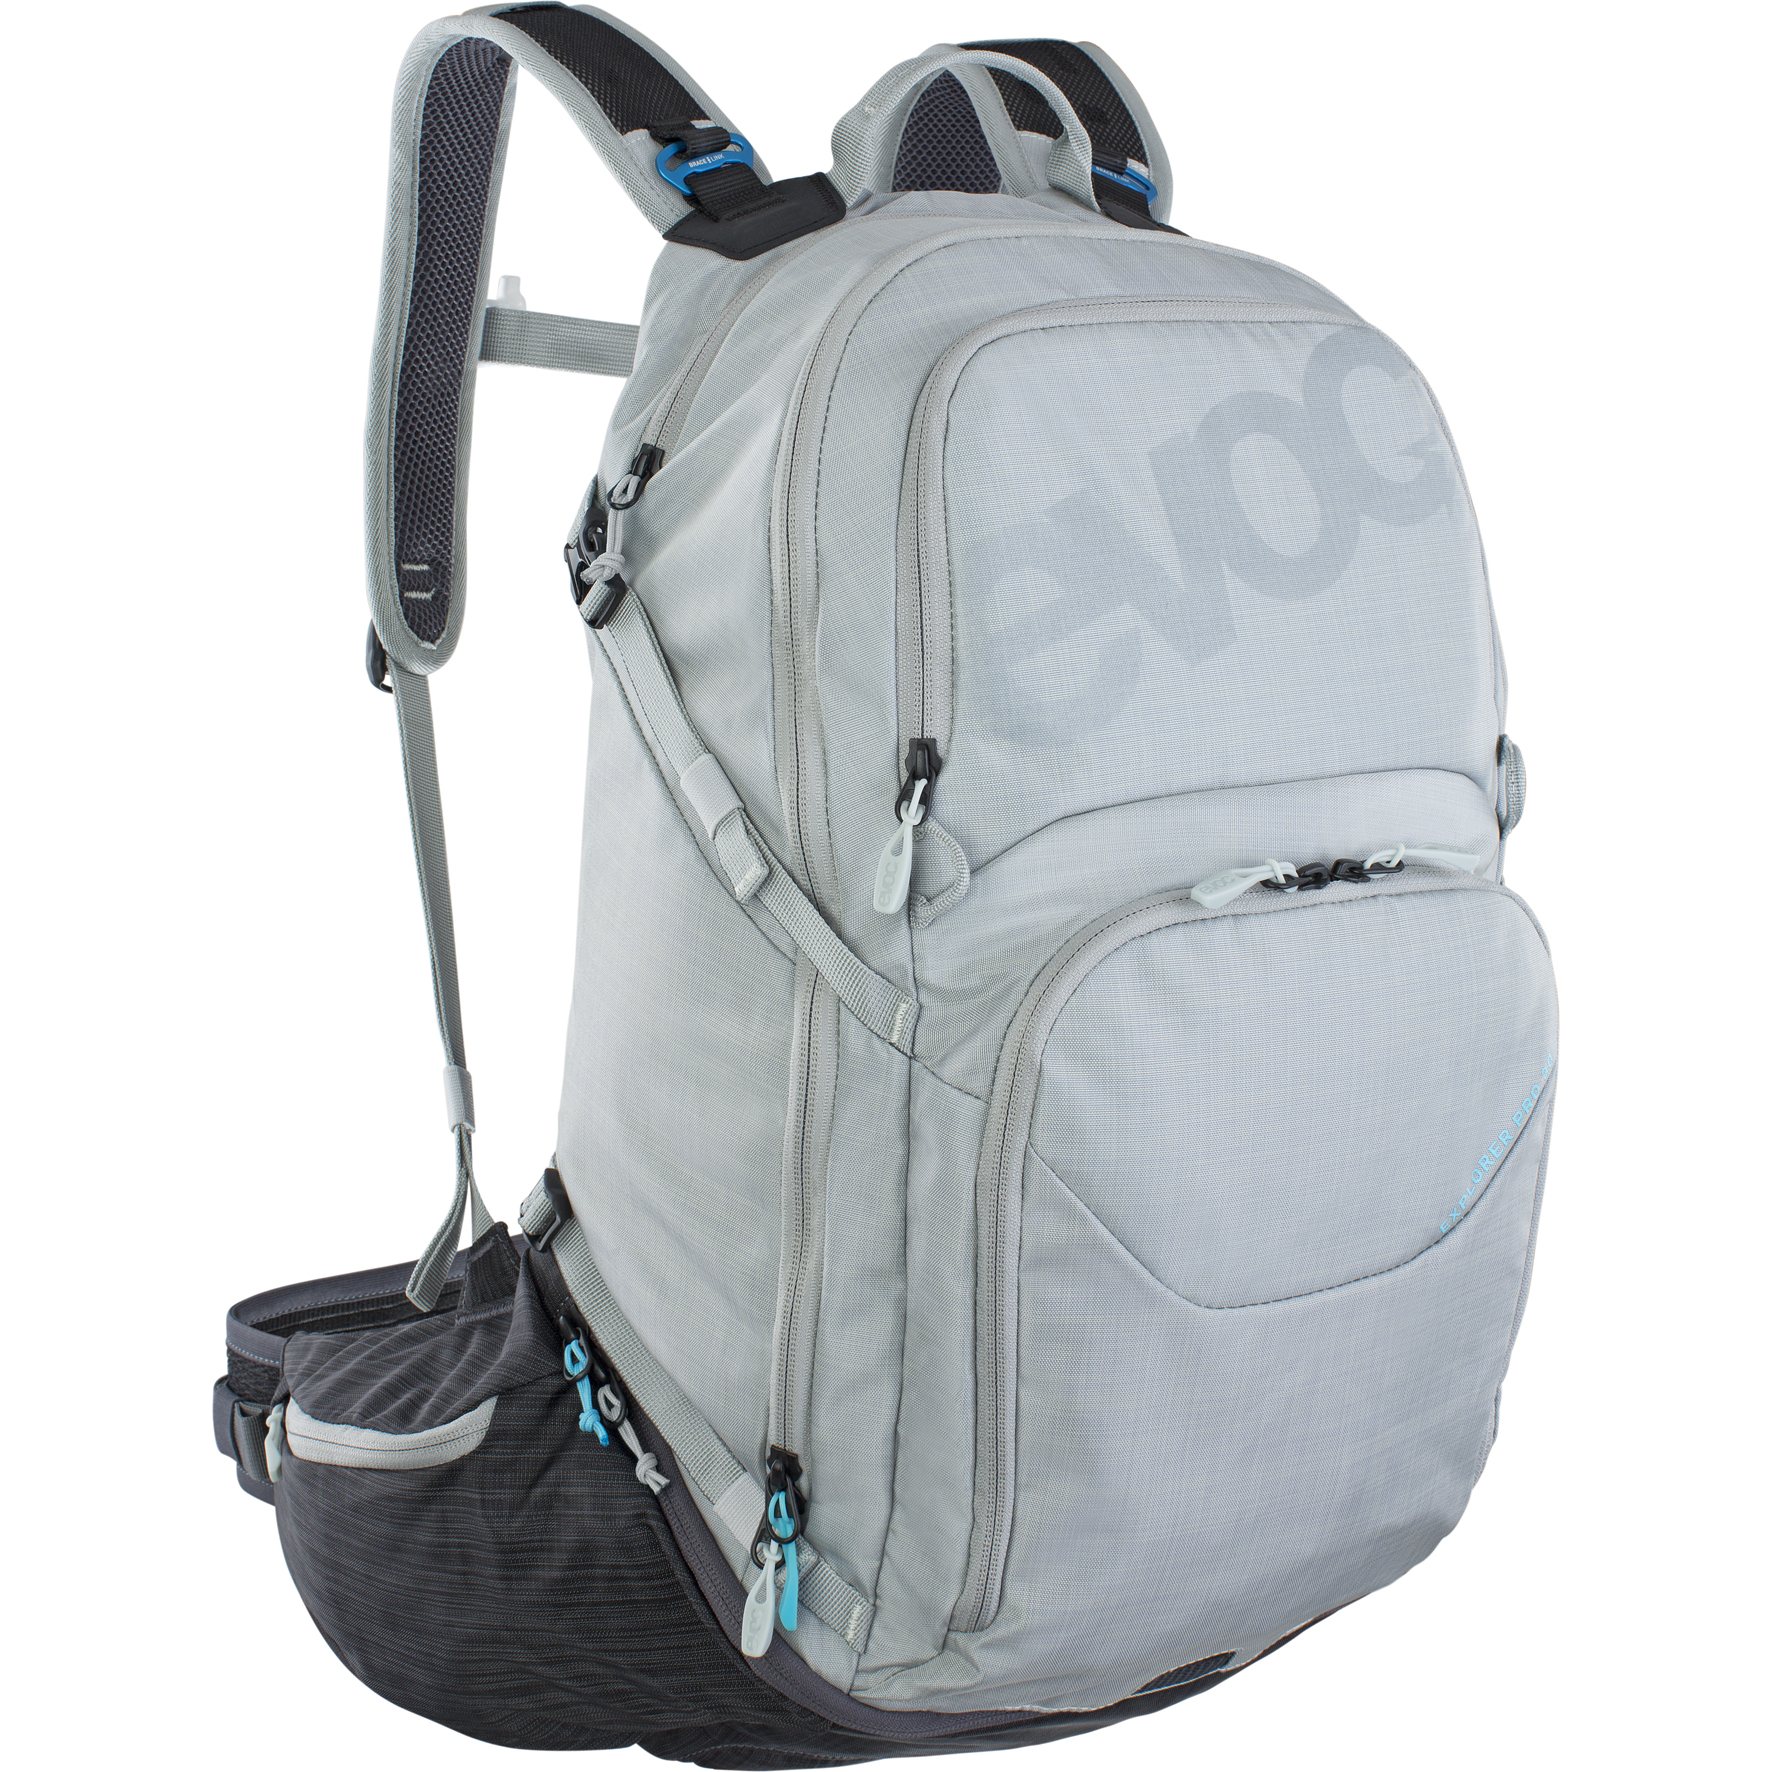 Picture of EVOC Explorer Pro Backpack - 30 L - Silver / Carbon Grey